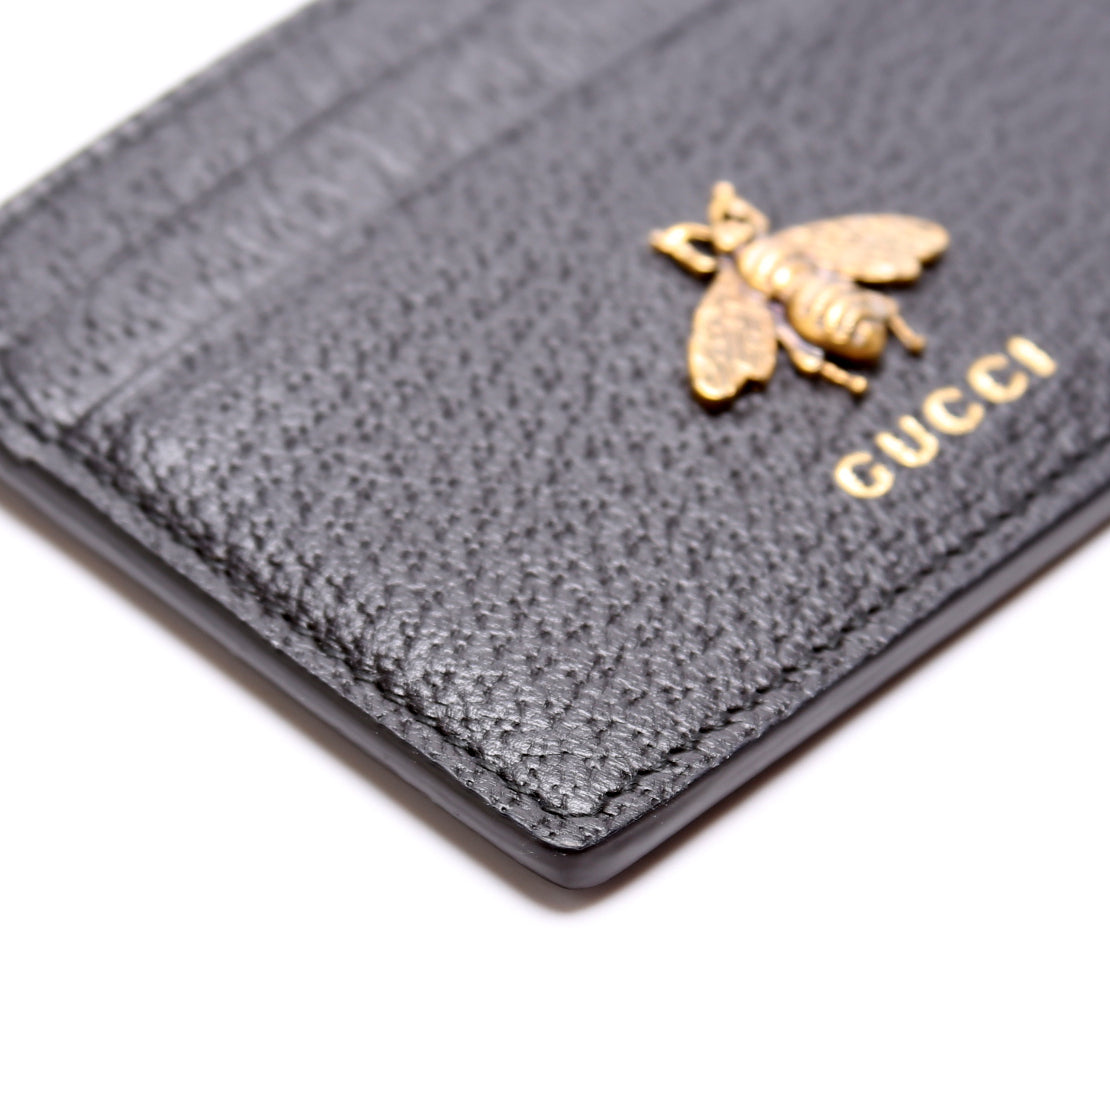 Animalier leather card case